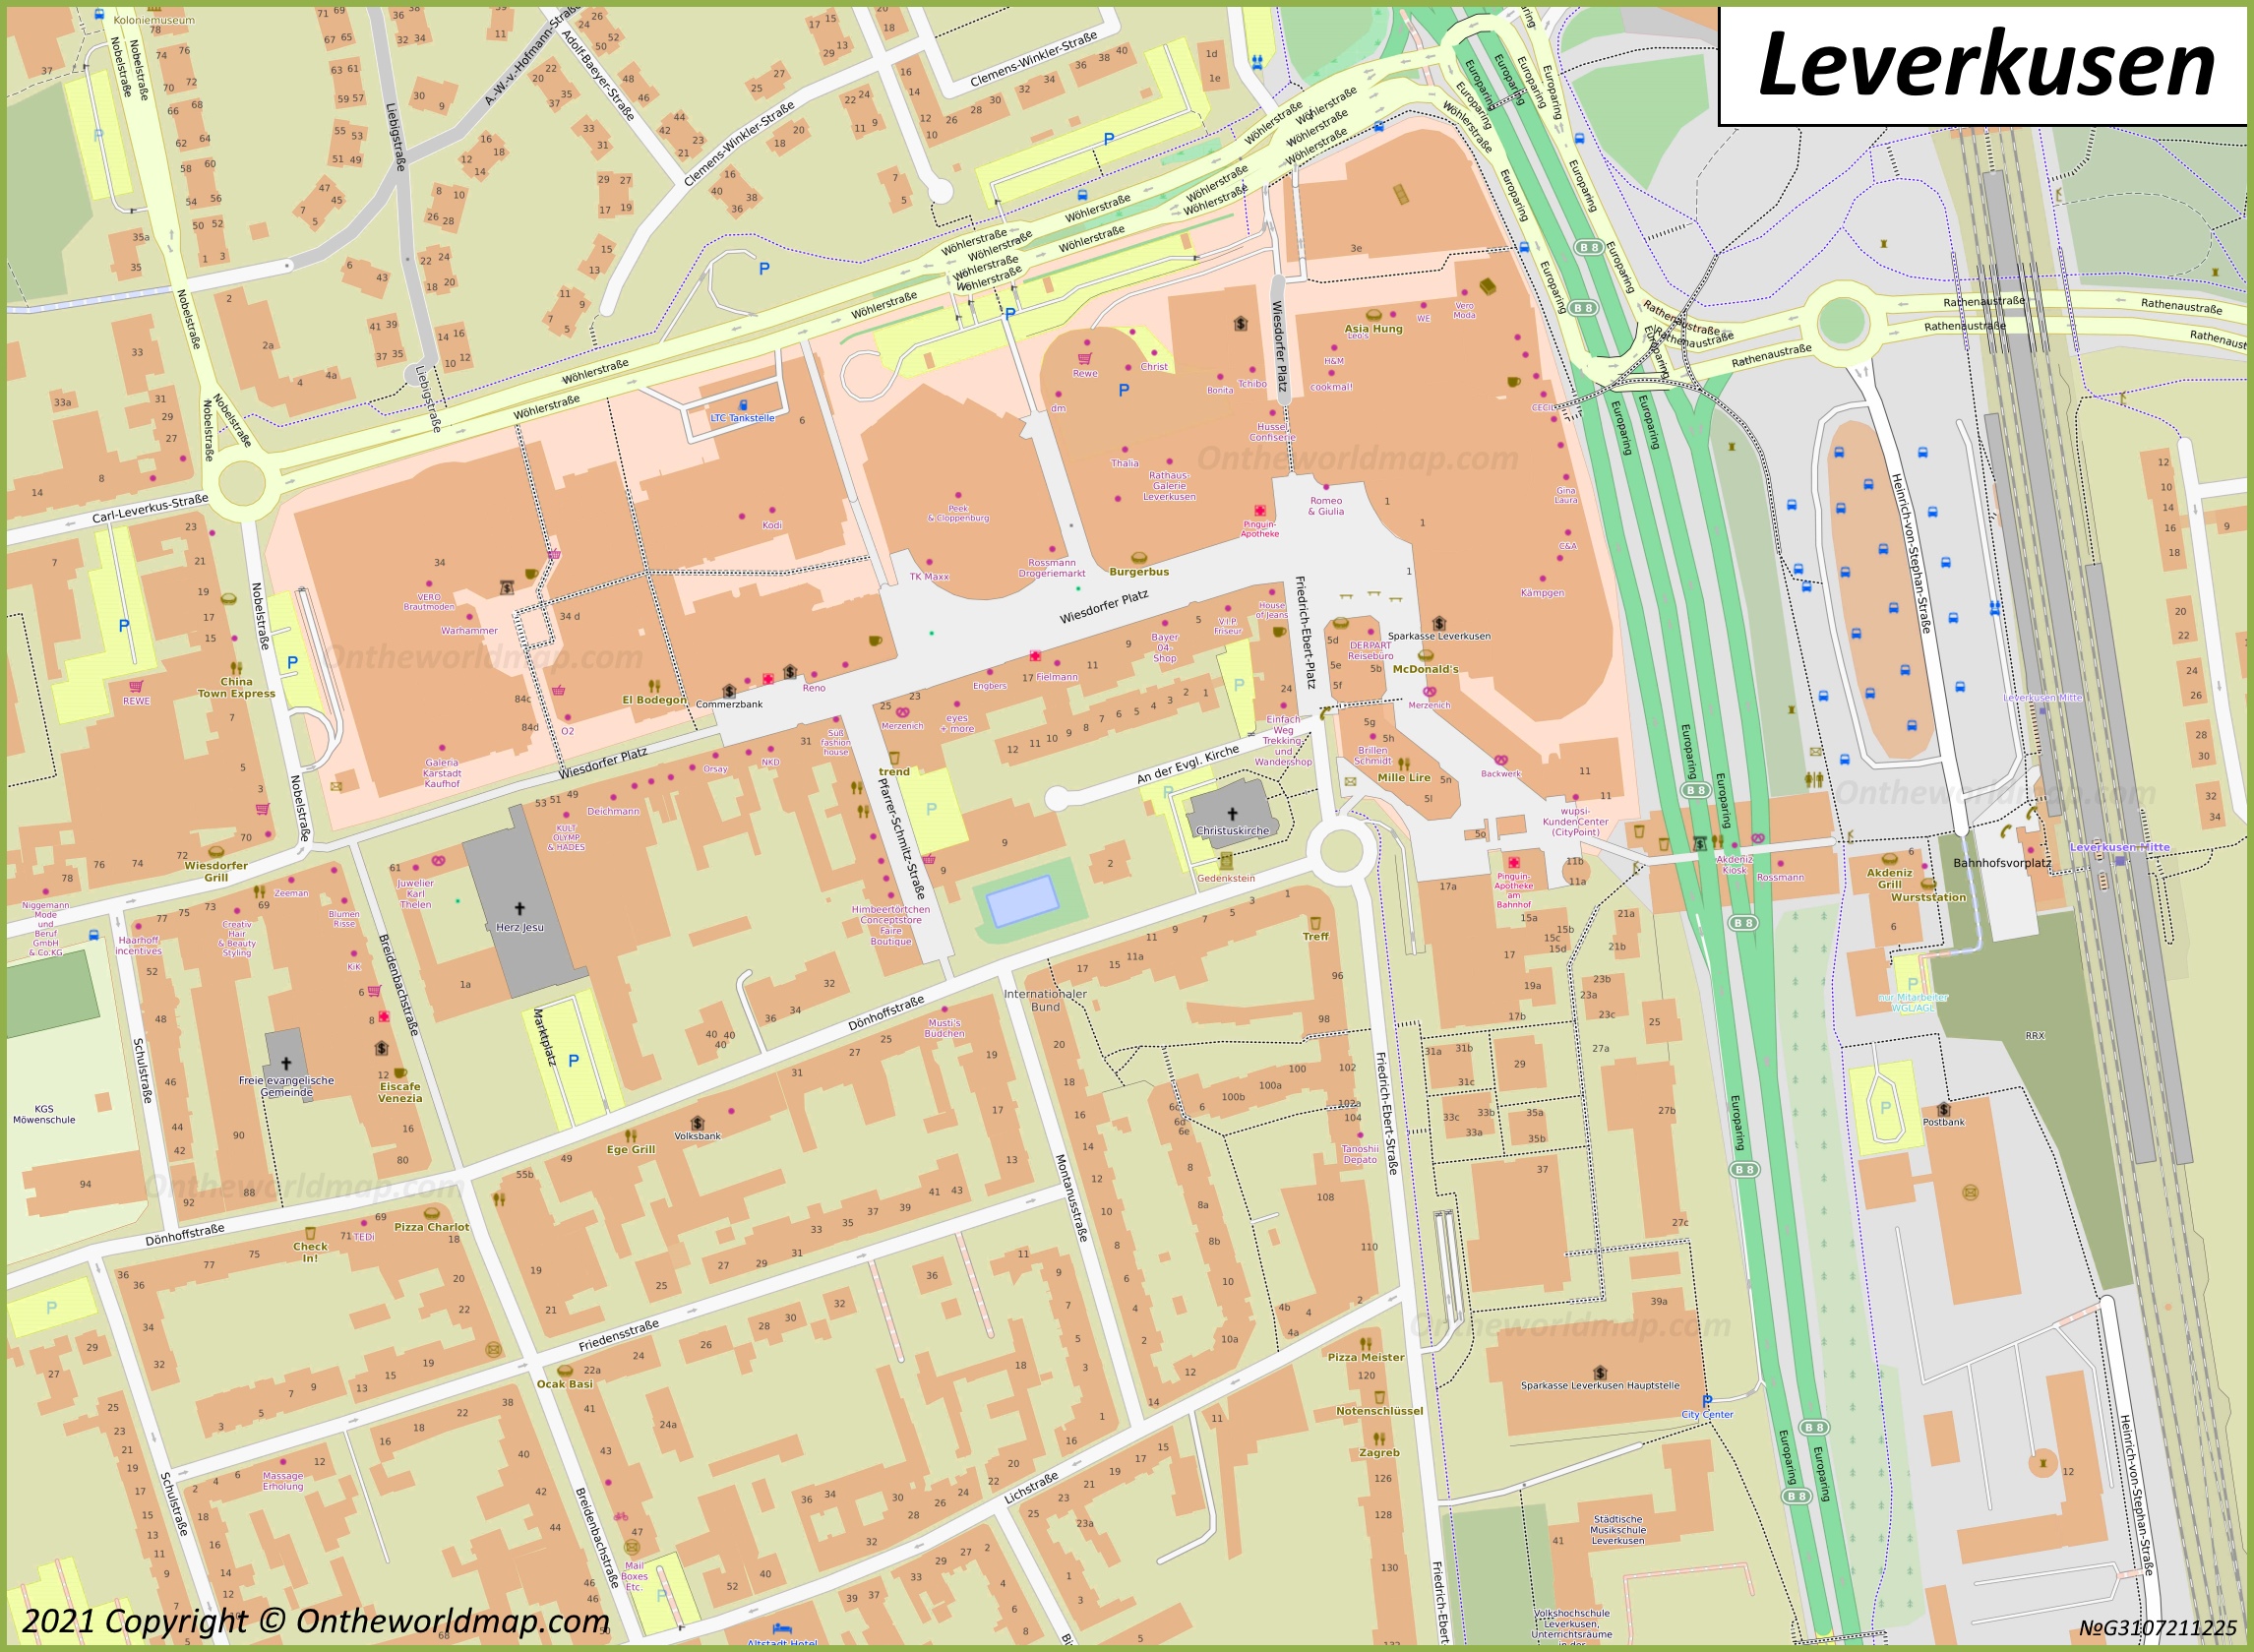 Leverkusen City Center Map